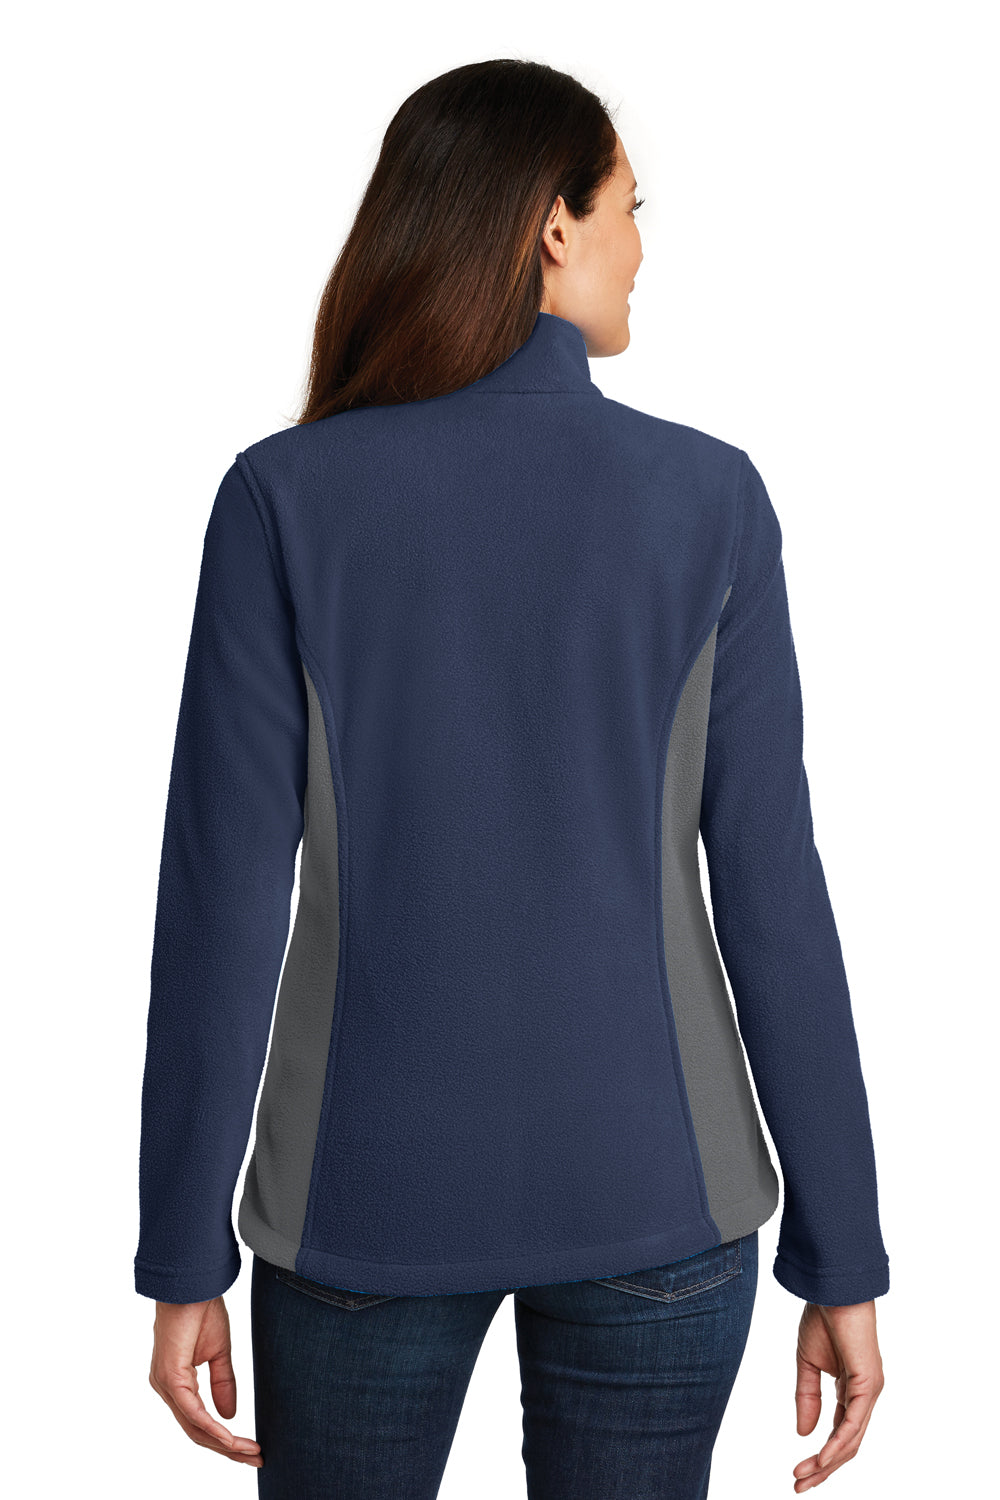 Port Authority L216 Womens Full Zip Fleece Jacket Navy Blue/Grey Back